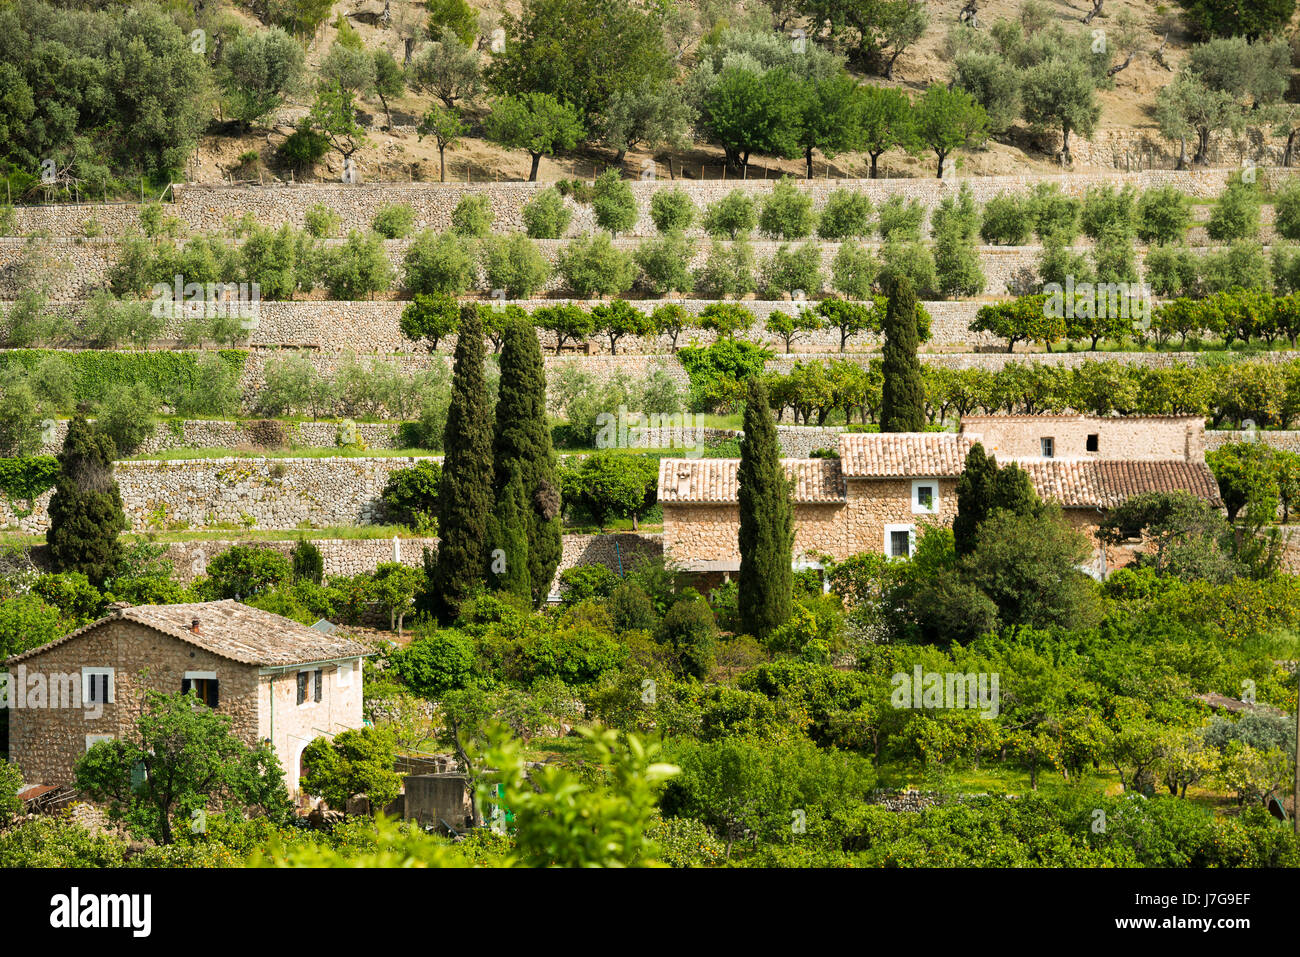 Mountain village with citrus plantations, Fornalutx, Serra de Tramuntana, Majorca, Balearics, Spain Stock Photo